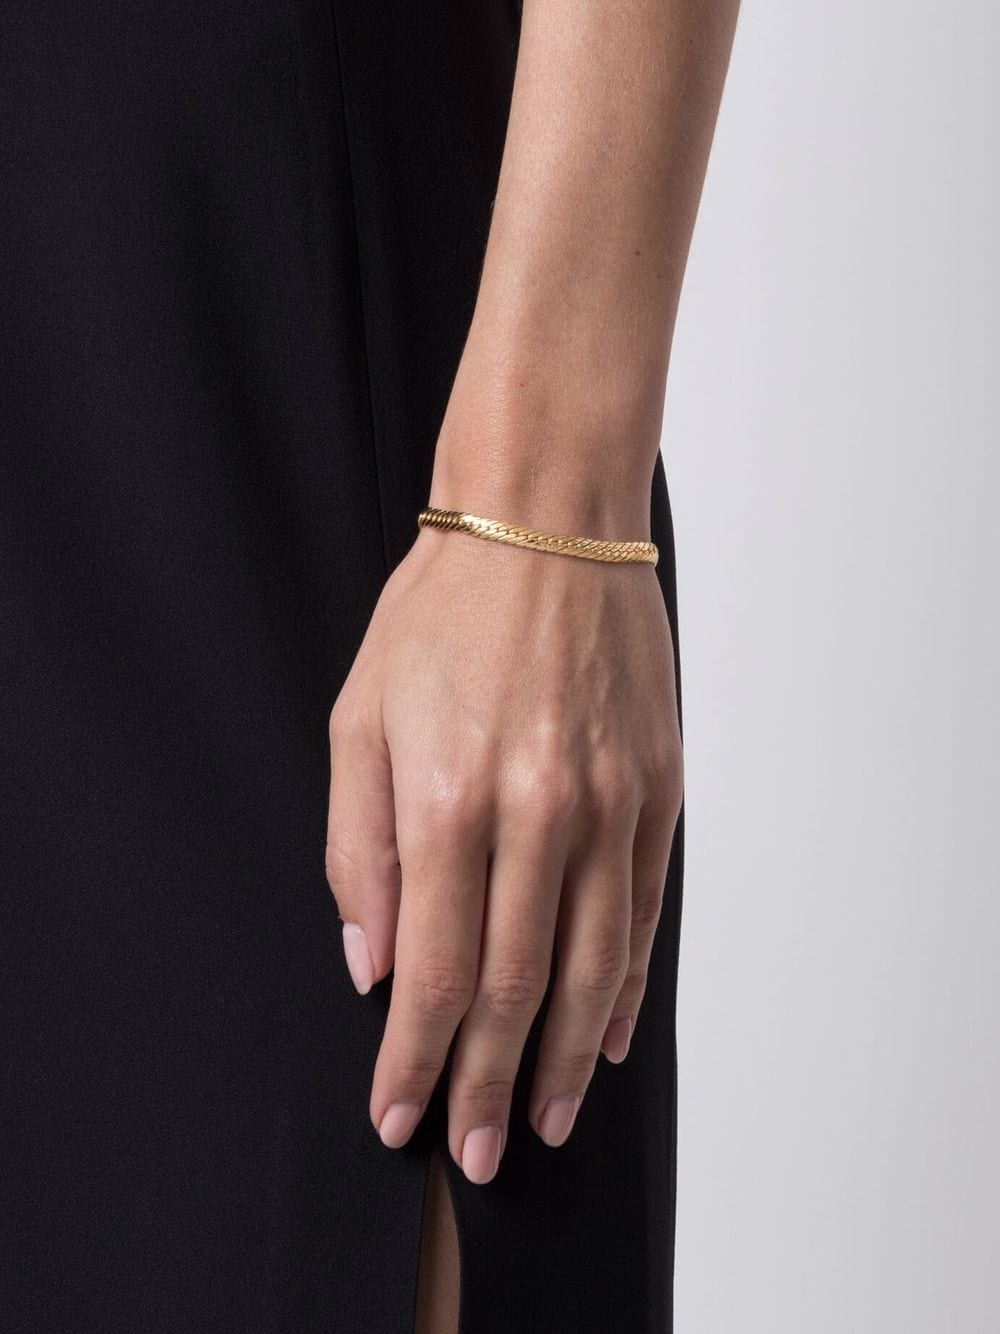 Shop Missoma Camail Snake Chain Bracelet In Gold